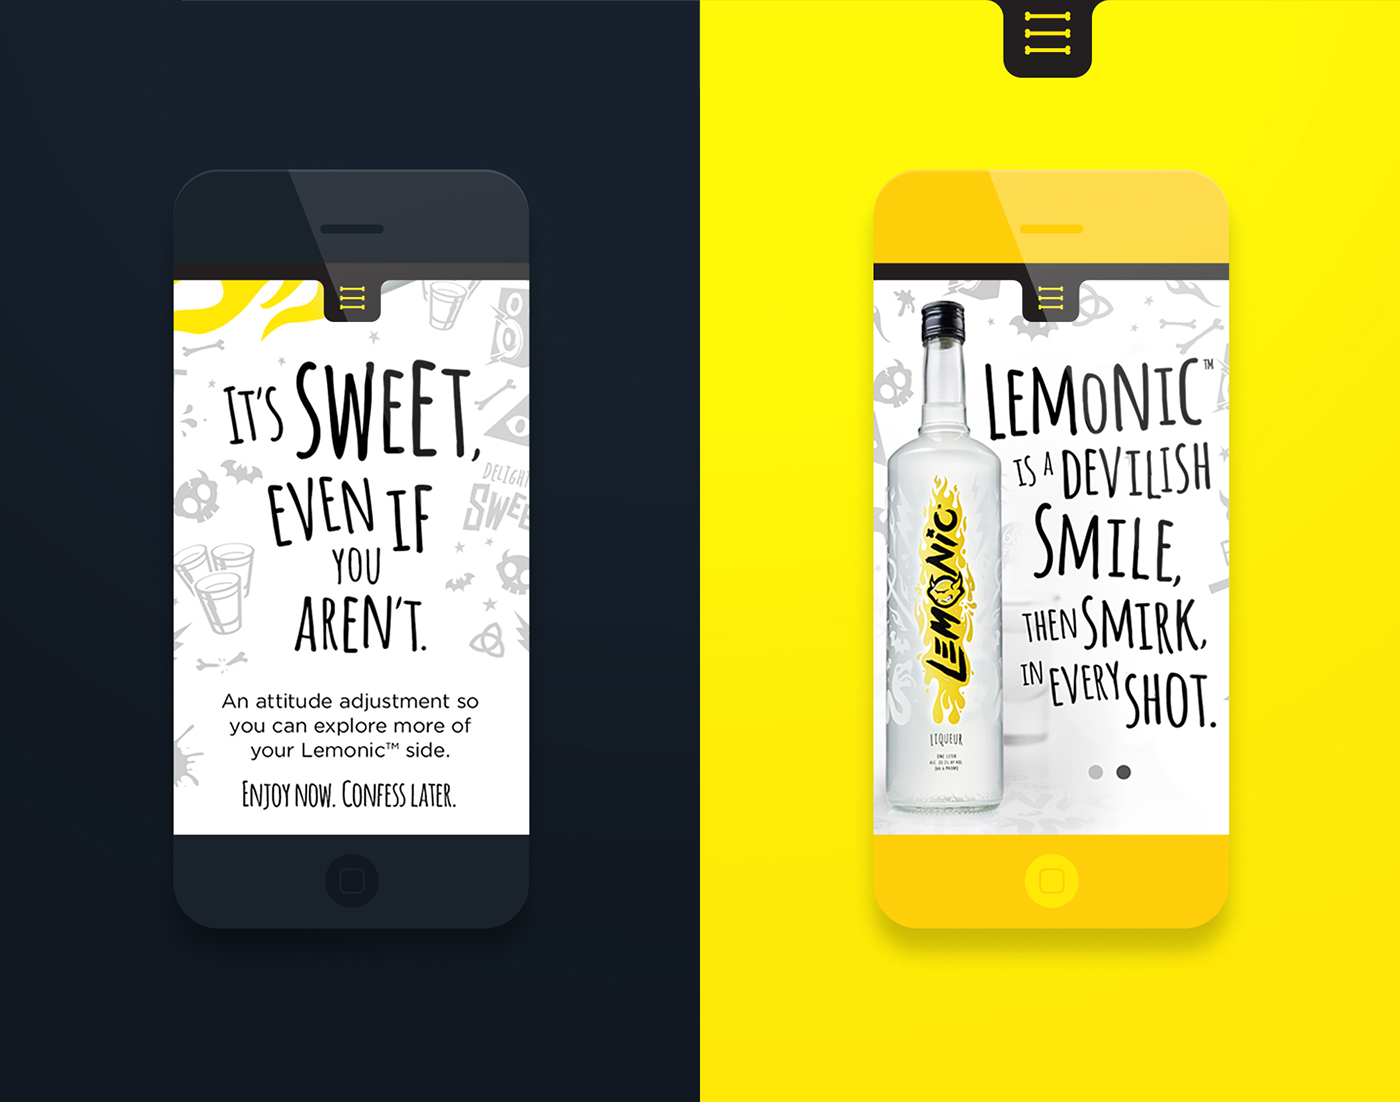 Lemonic lemon spirit alcohol devilish mobile game bottle refreshment citrus liquor social beverage comite drink